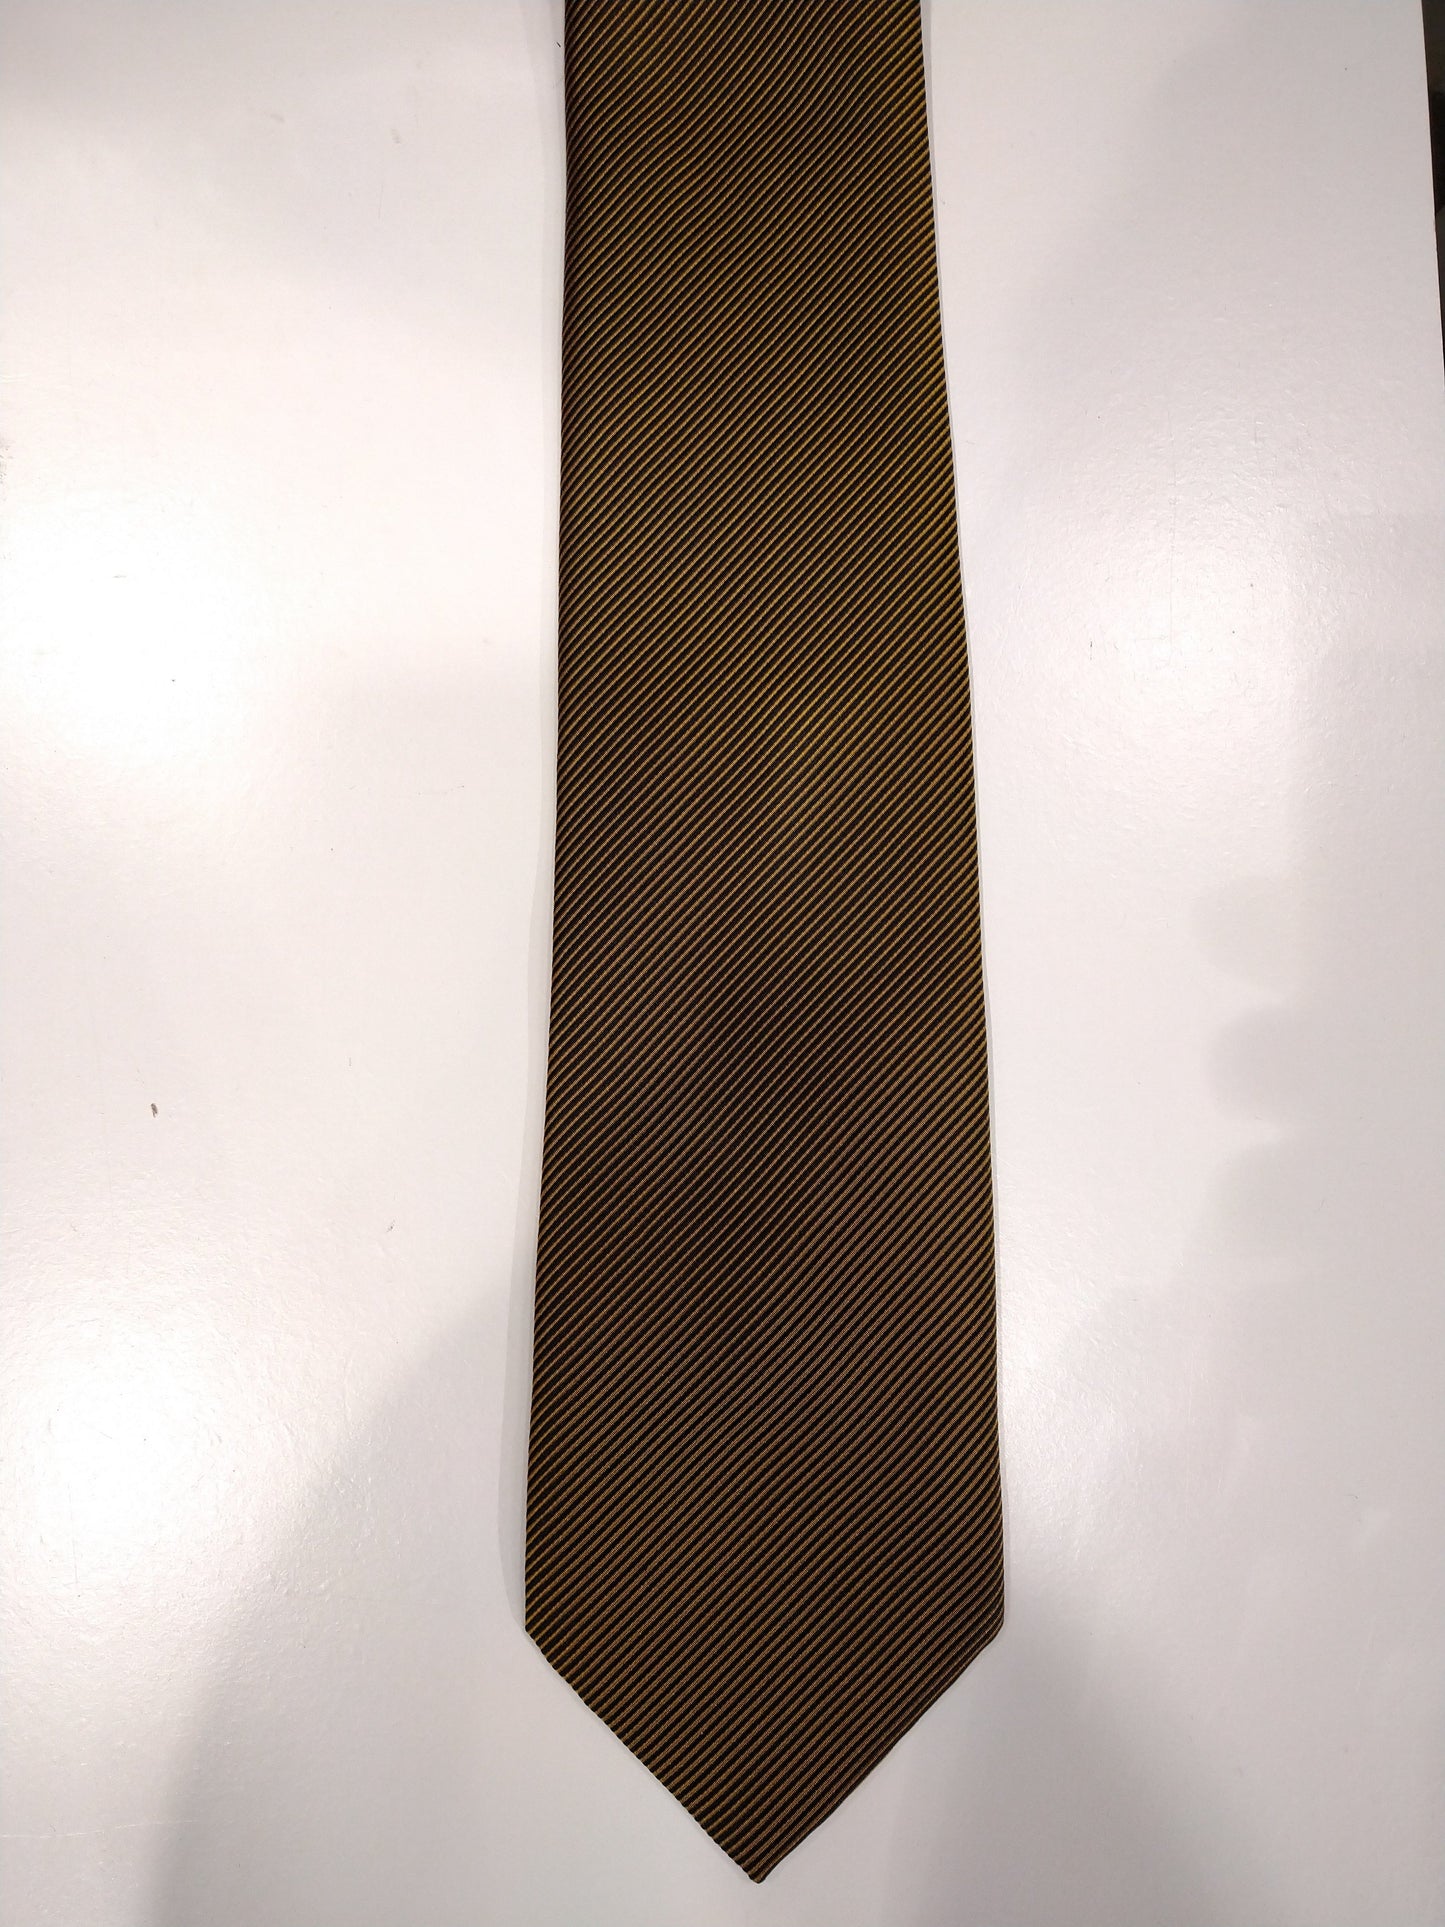 Silk tie. Yellow gold black motif.